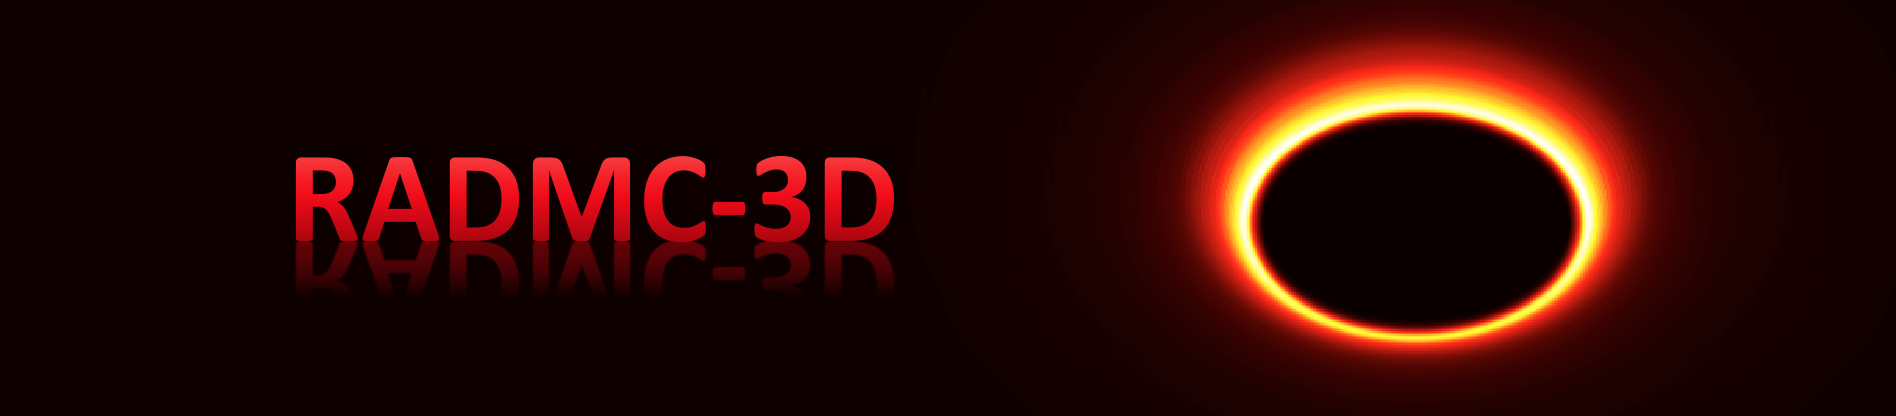 RADMC-3D